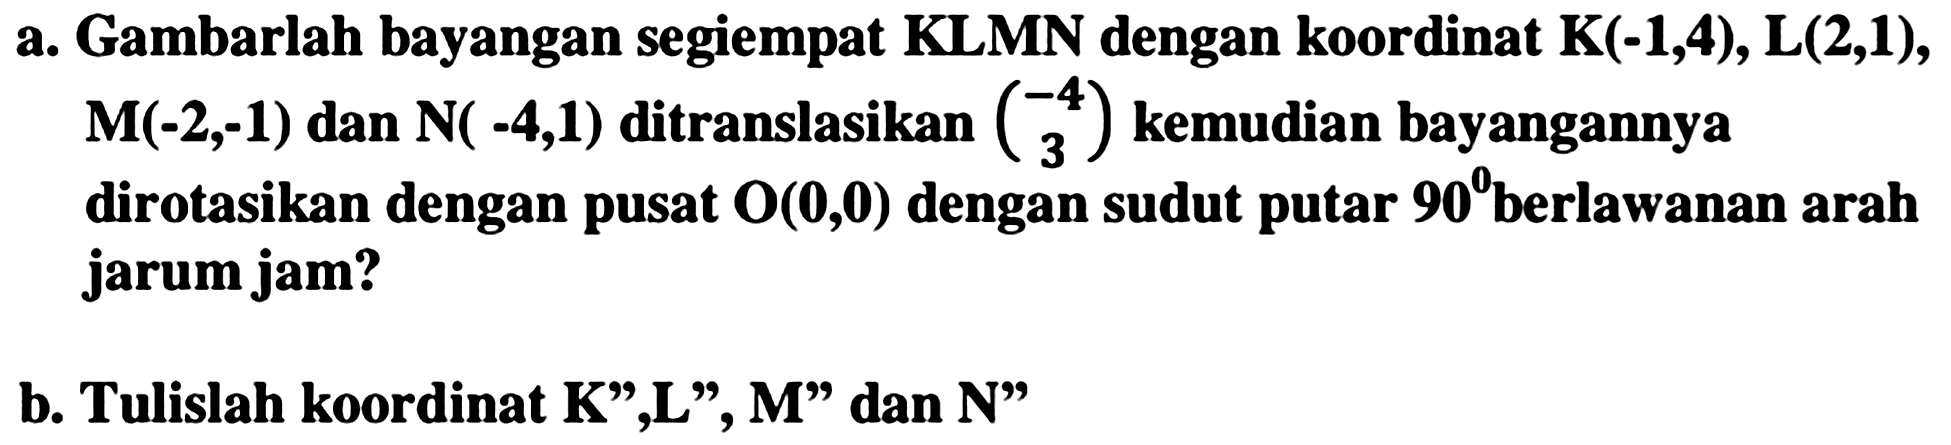 a. Gambarlah bayangan segiempat KLMN dengan koordinat K  (-1,4) , L  (2,1) ,  M(-2,-1)  dan  N(-4,1)  ditranslasikan  {c)-4  3  kemudian bayangannya dirotasikan dengan pusat  {O)({0), {0))  dengan sudut putar  {9 0)  berlawanan arah jarum jam?
b. Tulislah koordinat  {K)^(prime prime), {L)^(prime prime), {M) "  dan  {N)^(prime prime) 